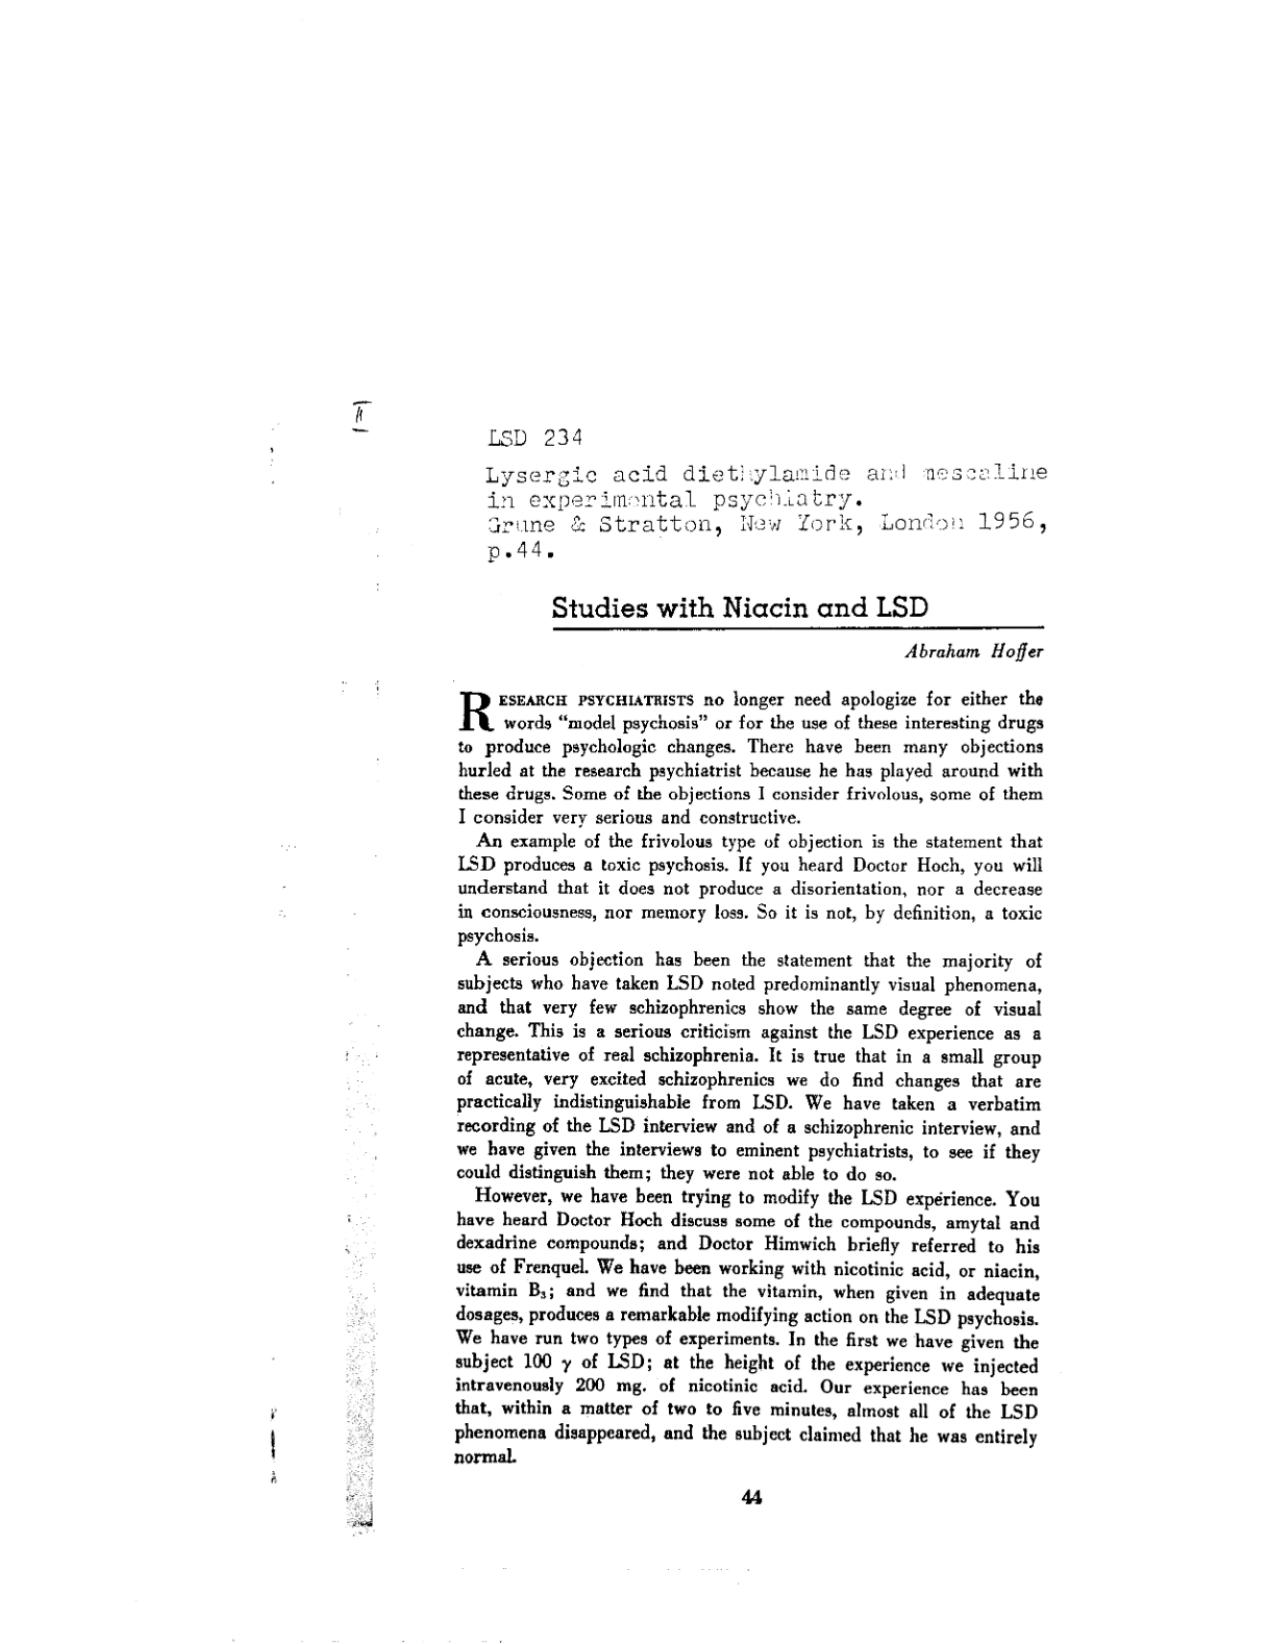 Niacin (Vitamin B3) and LSD by Abram Hoffer by Abram Hoffer Linus Pauling